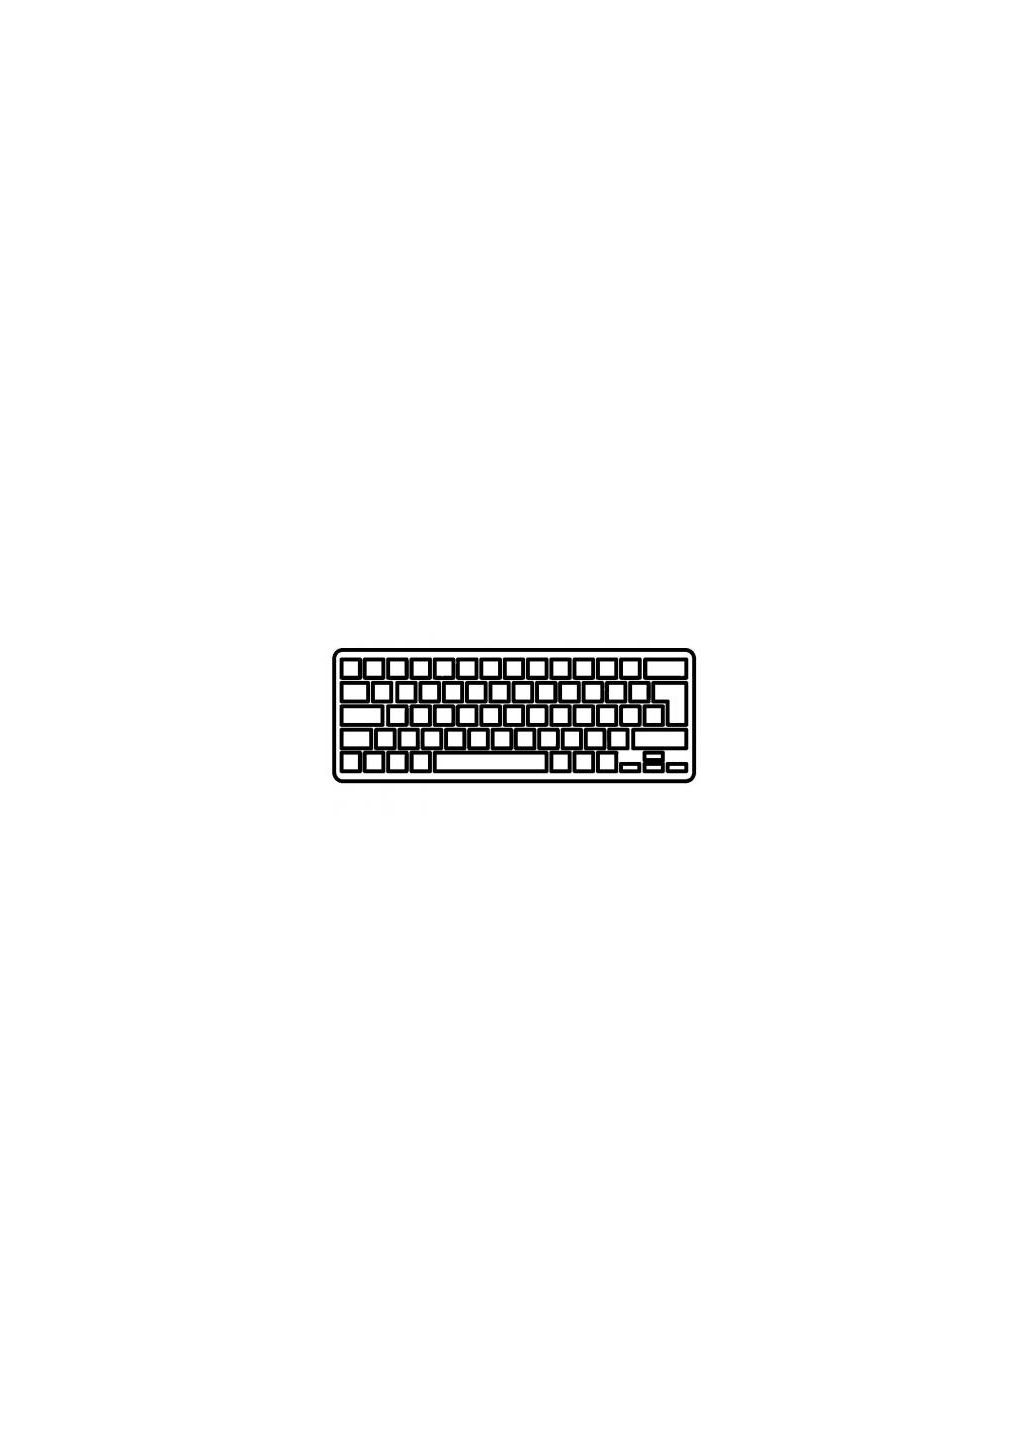 Клавиатура ноутбука Pavilion SleekBook 14E Series белая без рамки UA (A43763) HP pavilion sleekbook 14-e series белая без рамки ua (276706640)